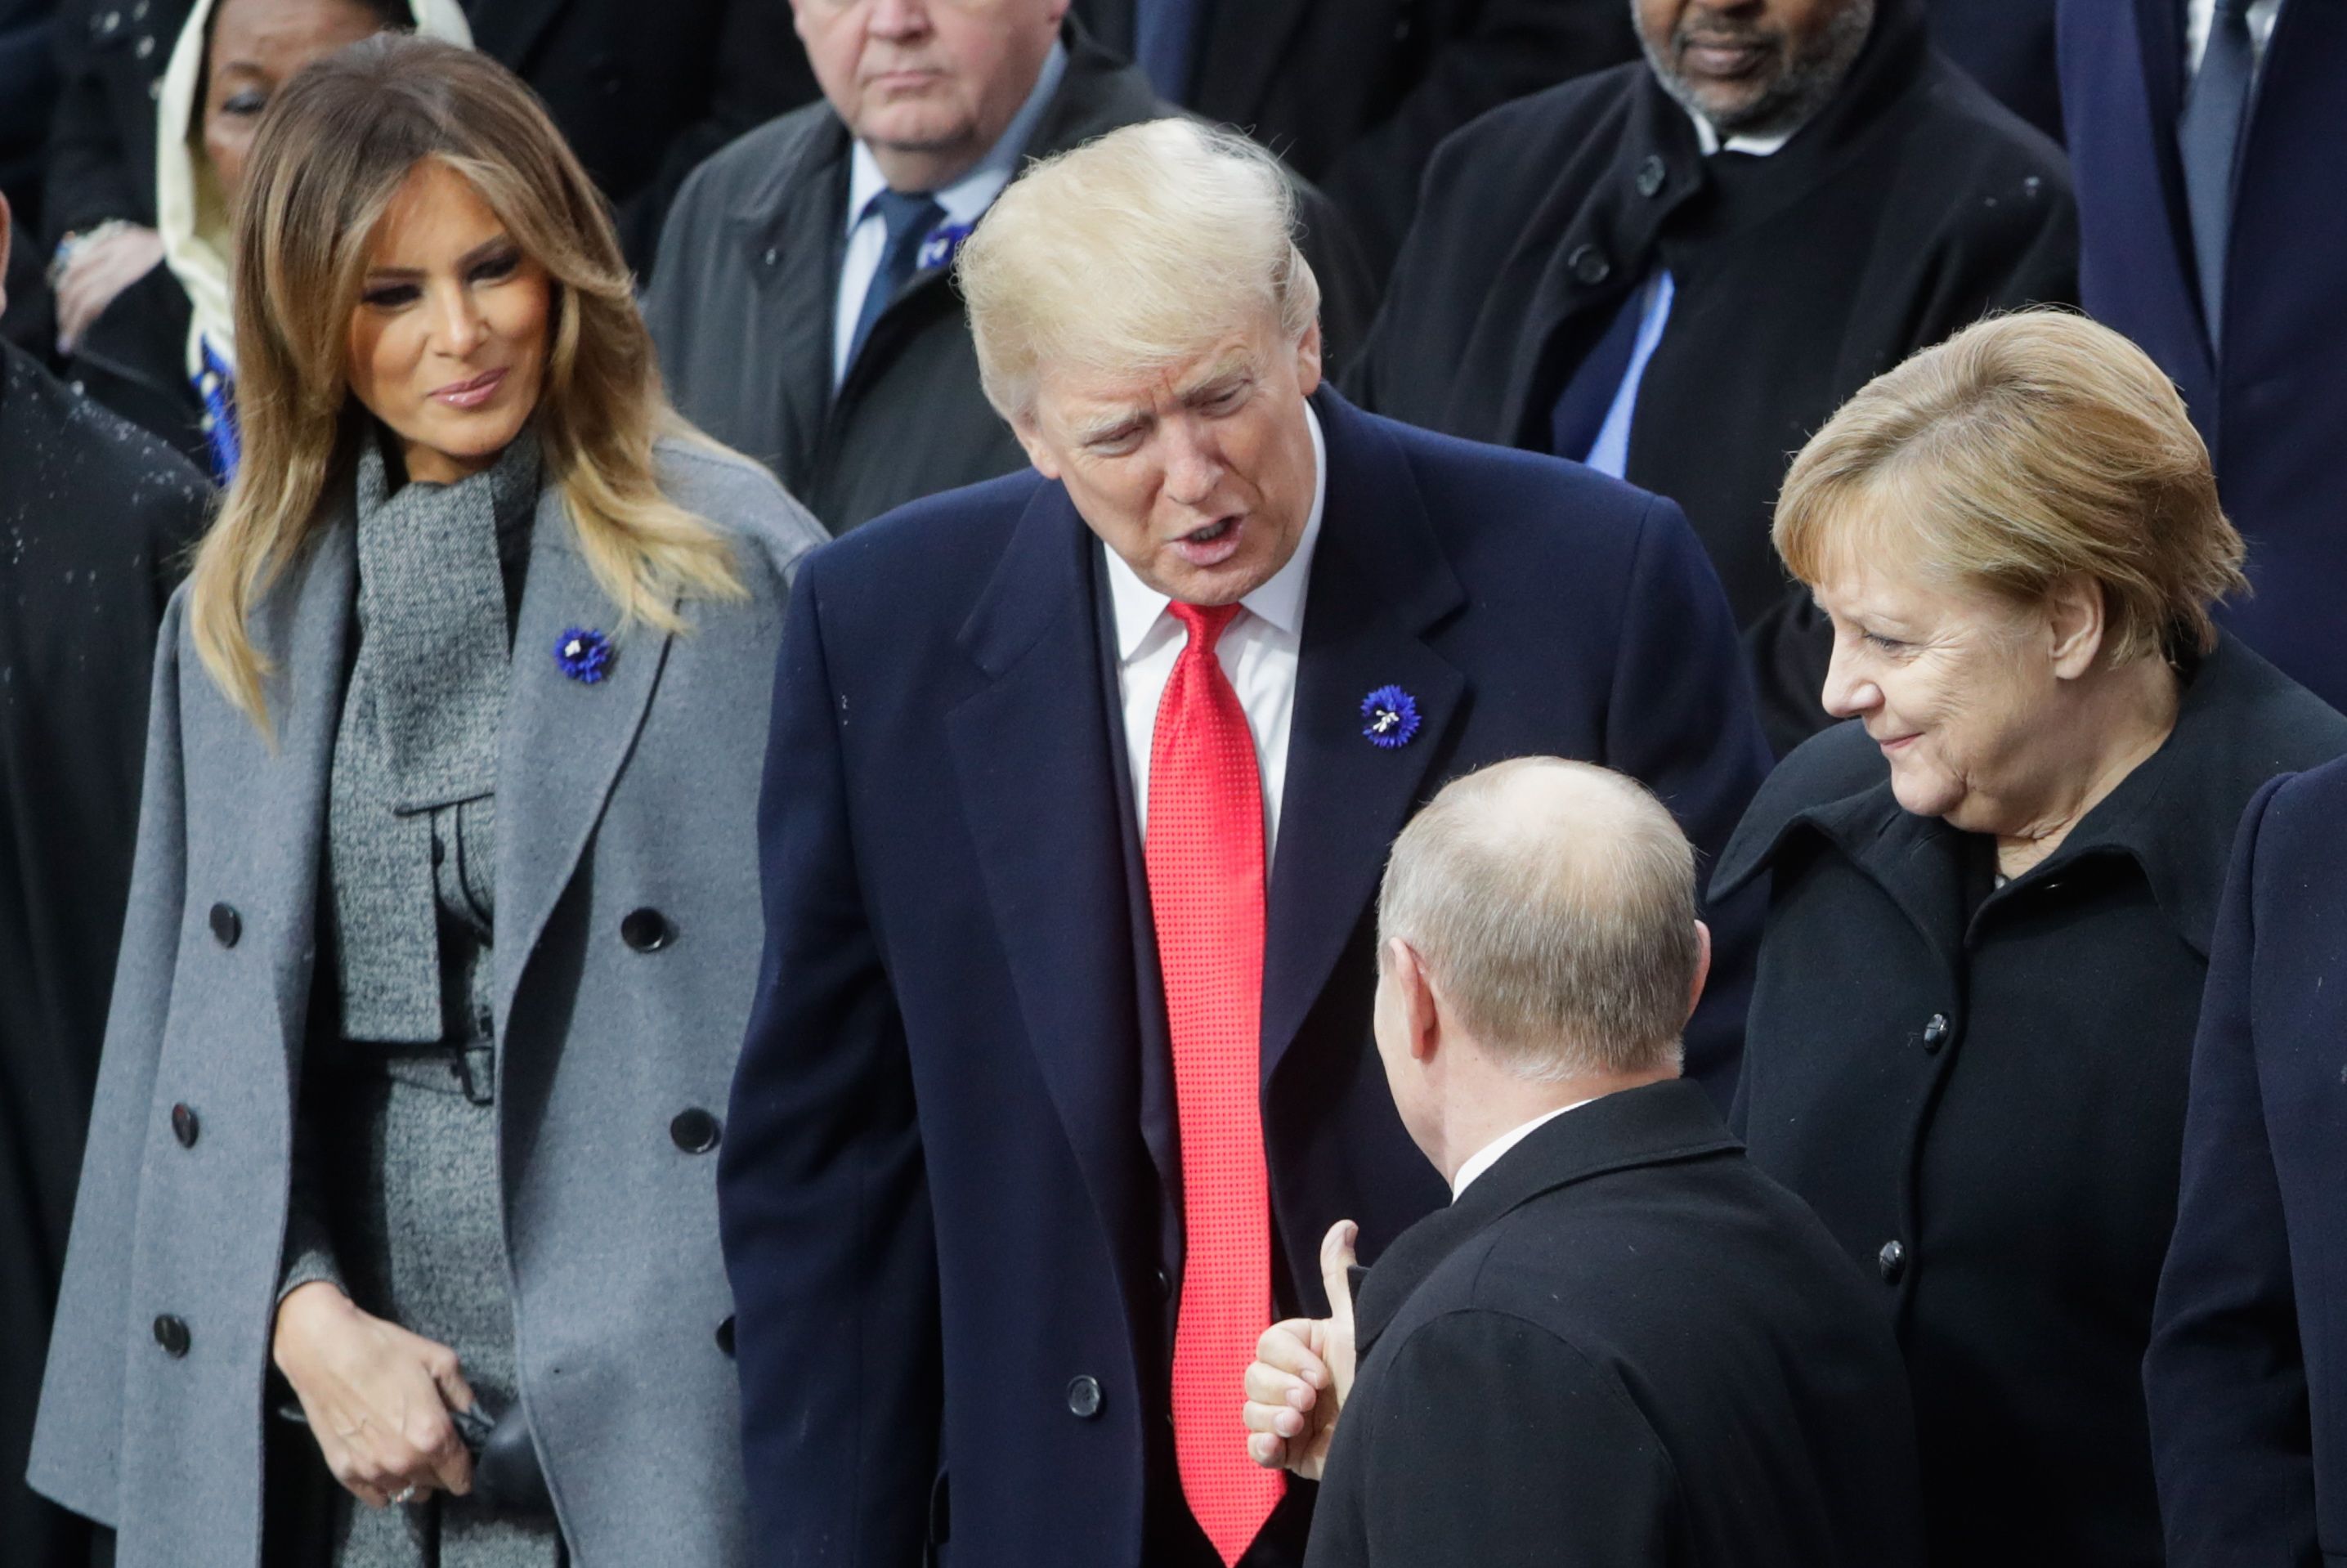 Melania and Trump greeting Vladimir Putin